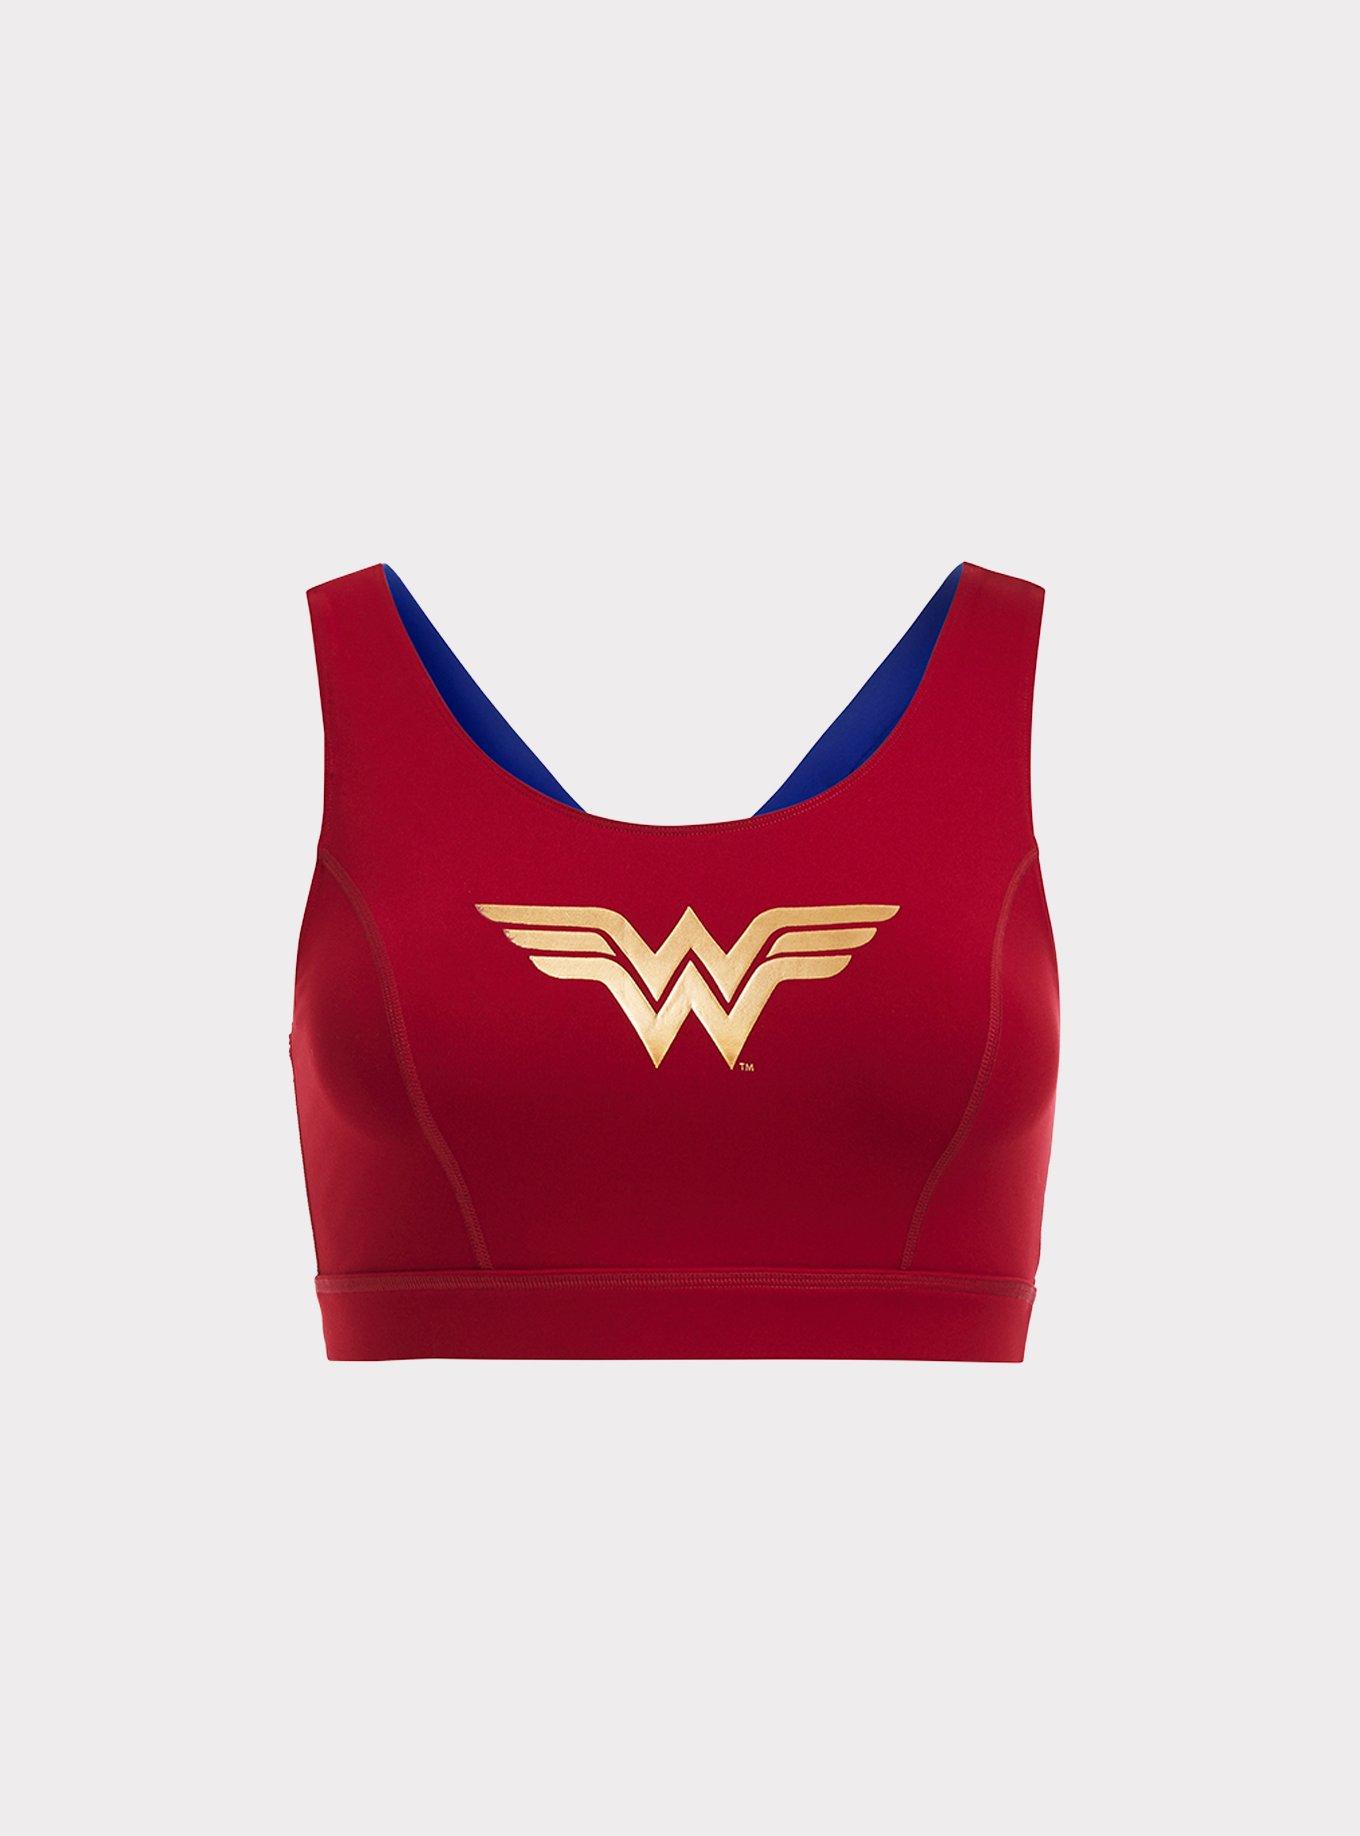 Wonder Woman Sports Bras for Women